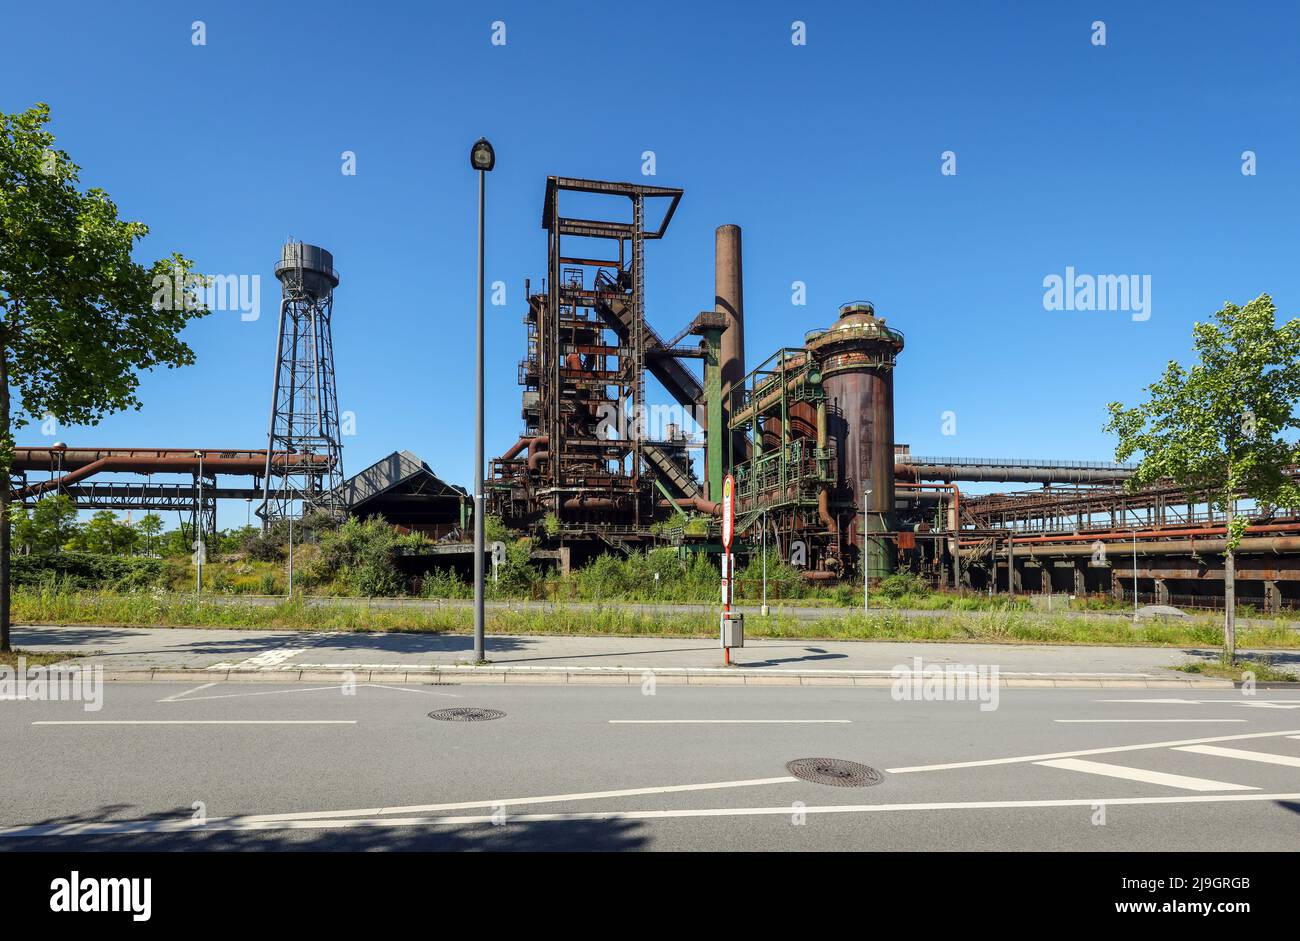 Dortmund, North Rhine-Westphalia, Germany - Phoenix West blast furnace plant. After the closure of the old Hoesch blast furnace plant in 1998, the sit Stock Photo